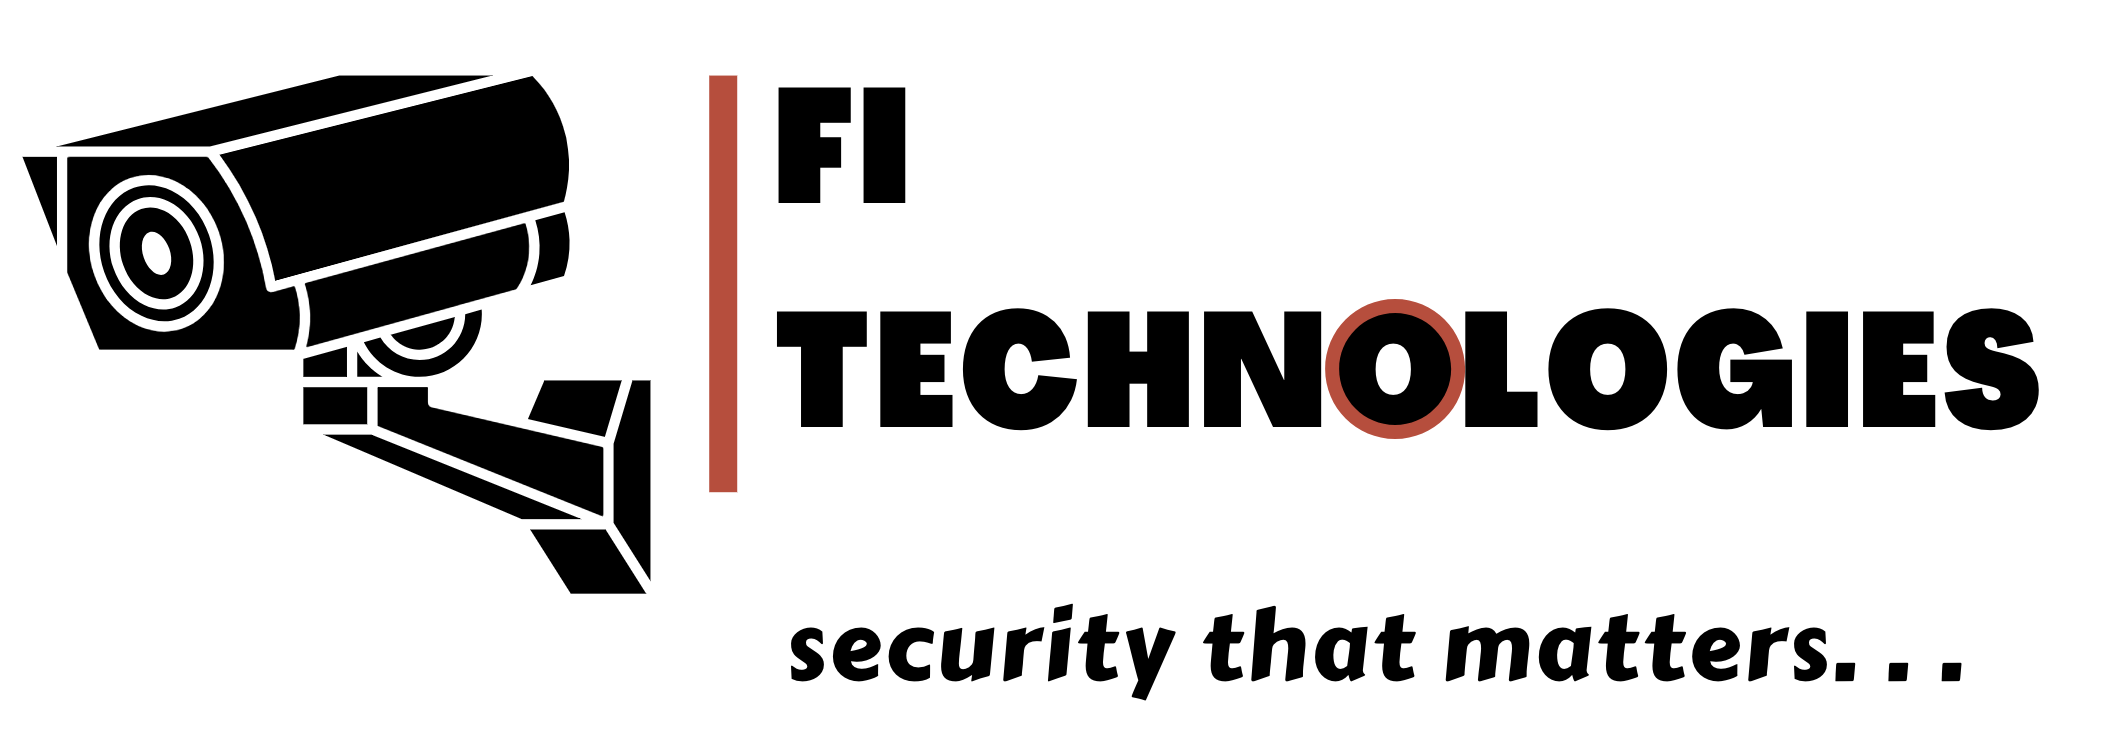 FI Technologies